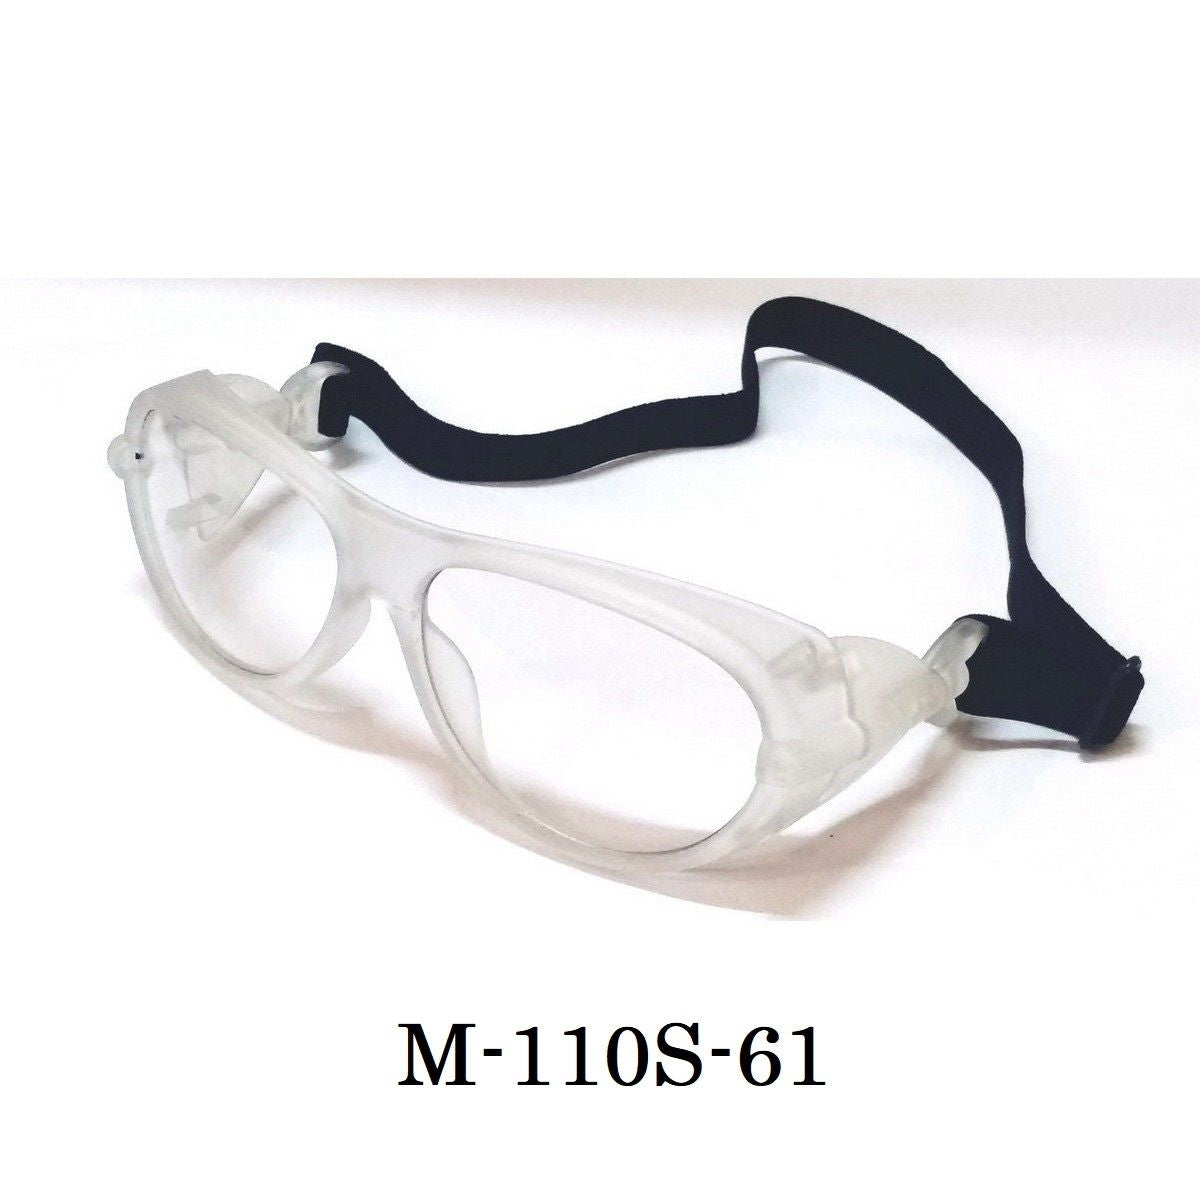 Anti Fog Matt White Biker Cycling Driving Glasses Sunglasses with Strap